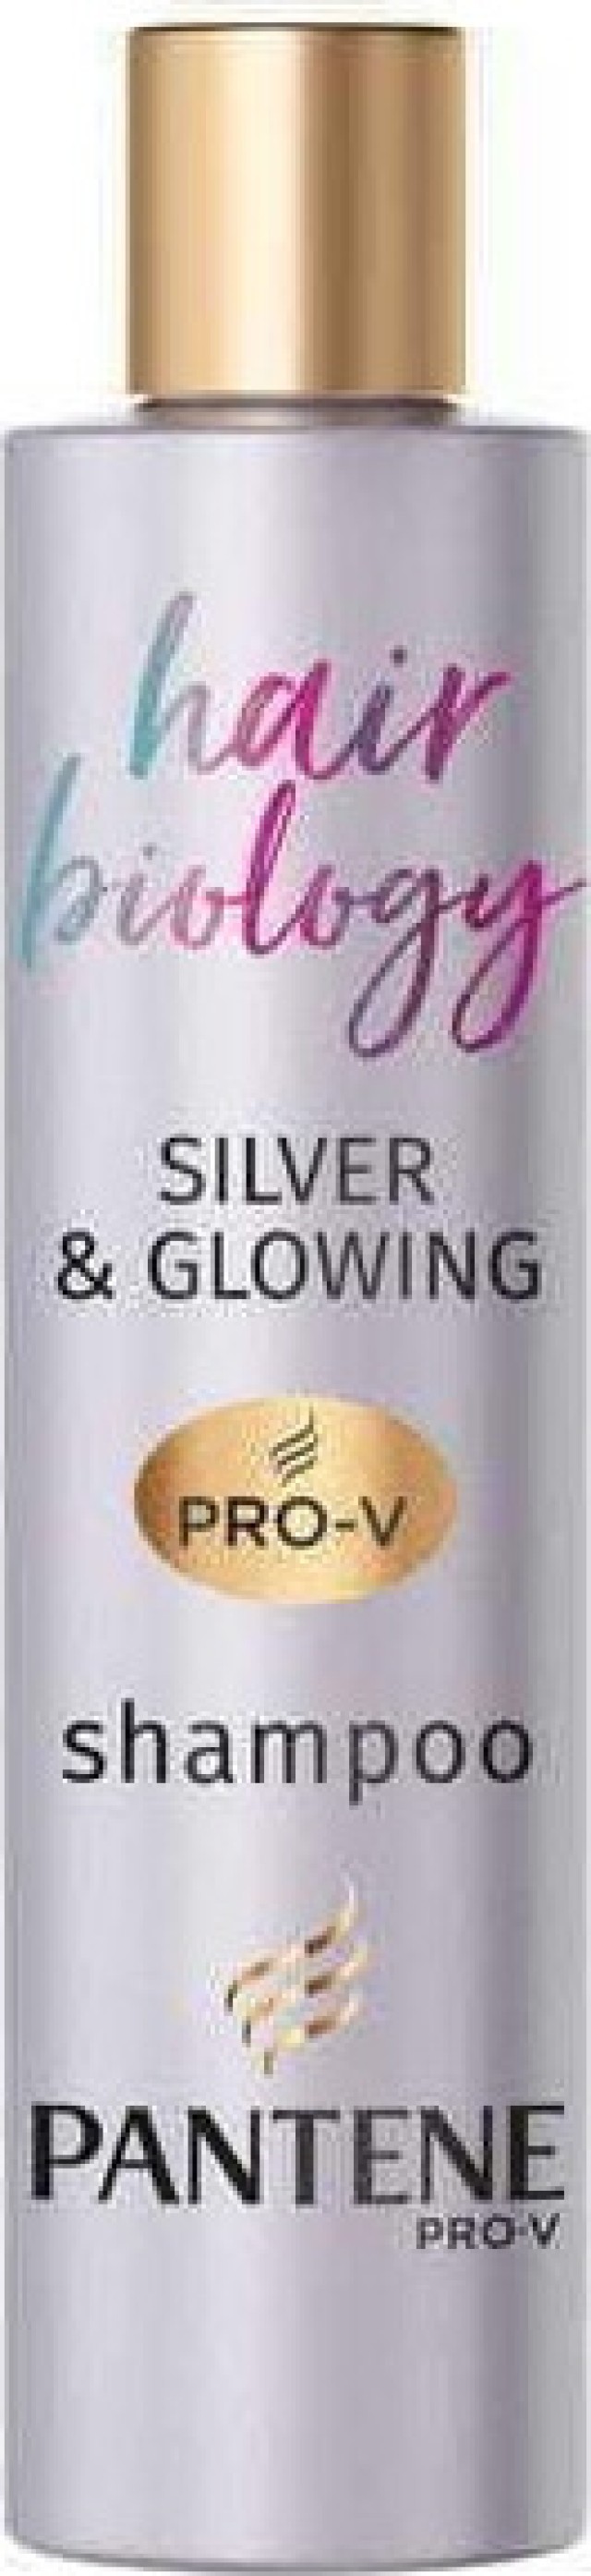 Pantene Pro V Hair Biology Silver & Glowing Shampoo Σαμπουάν Κατά Του Κιτρινίσματος 250ml